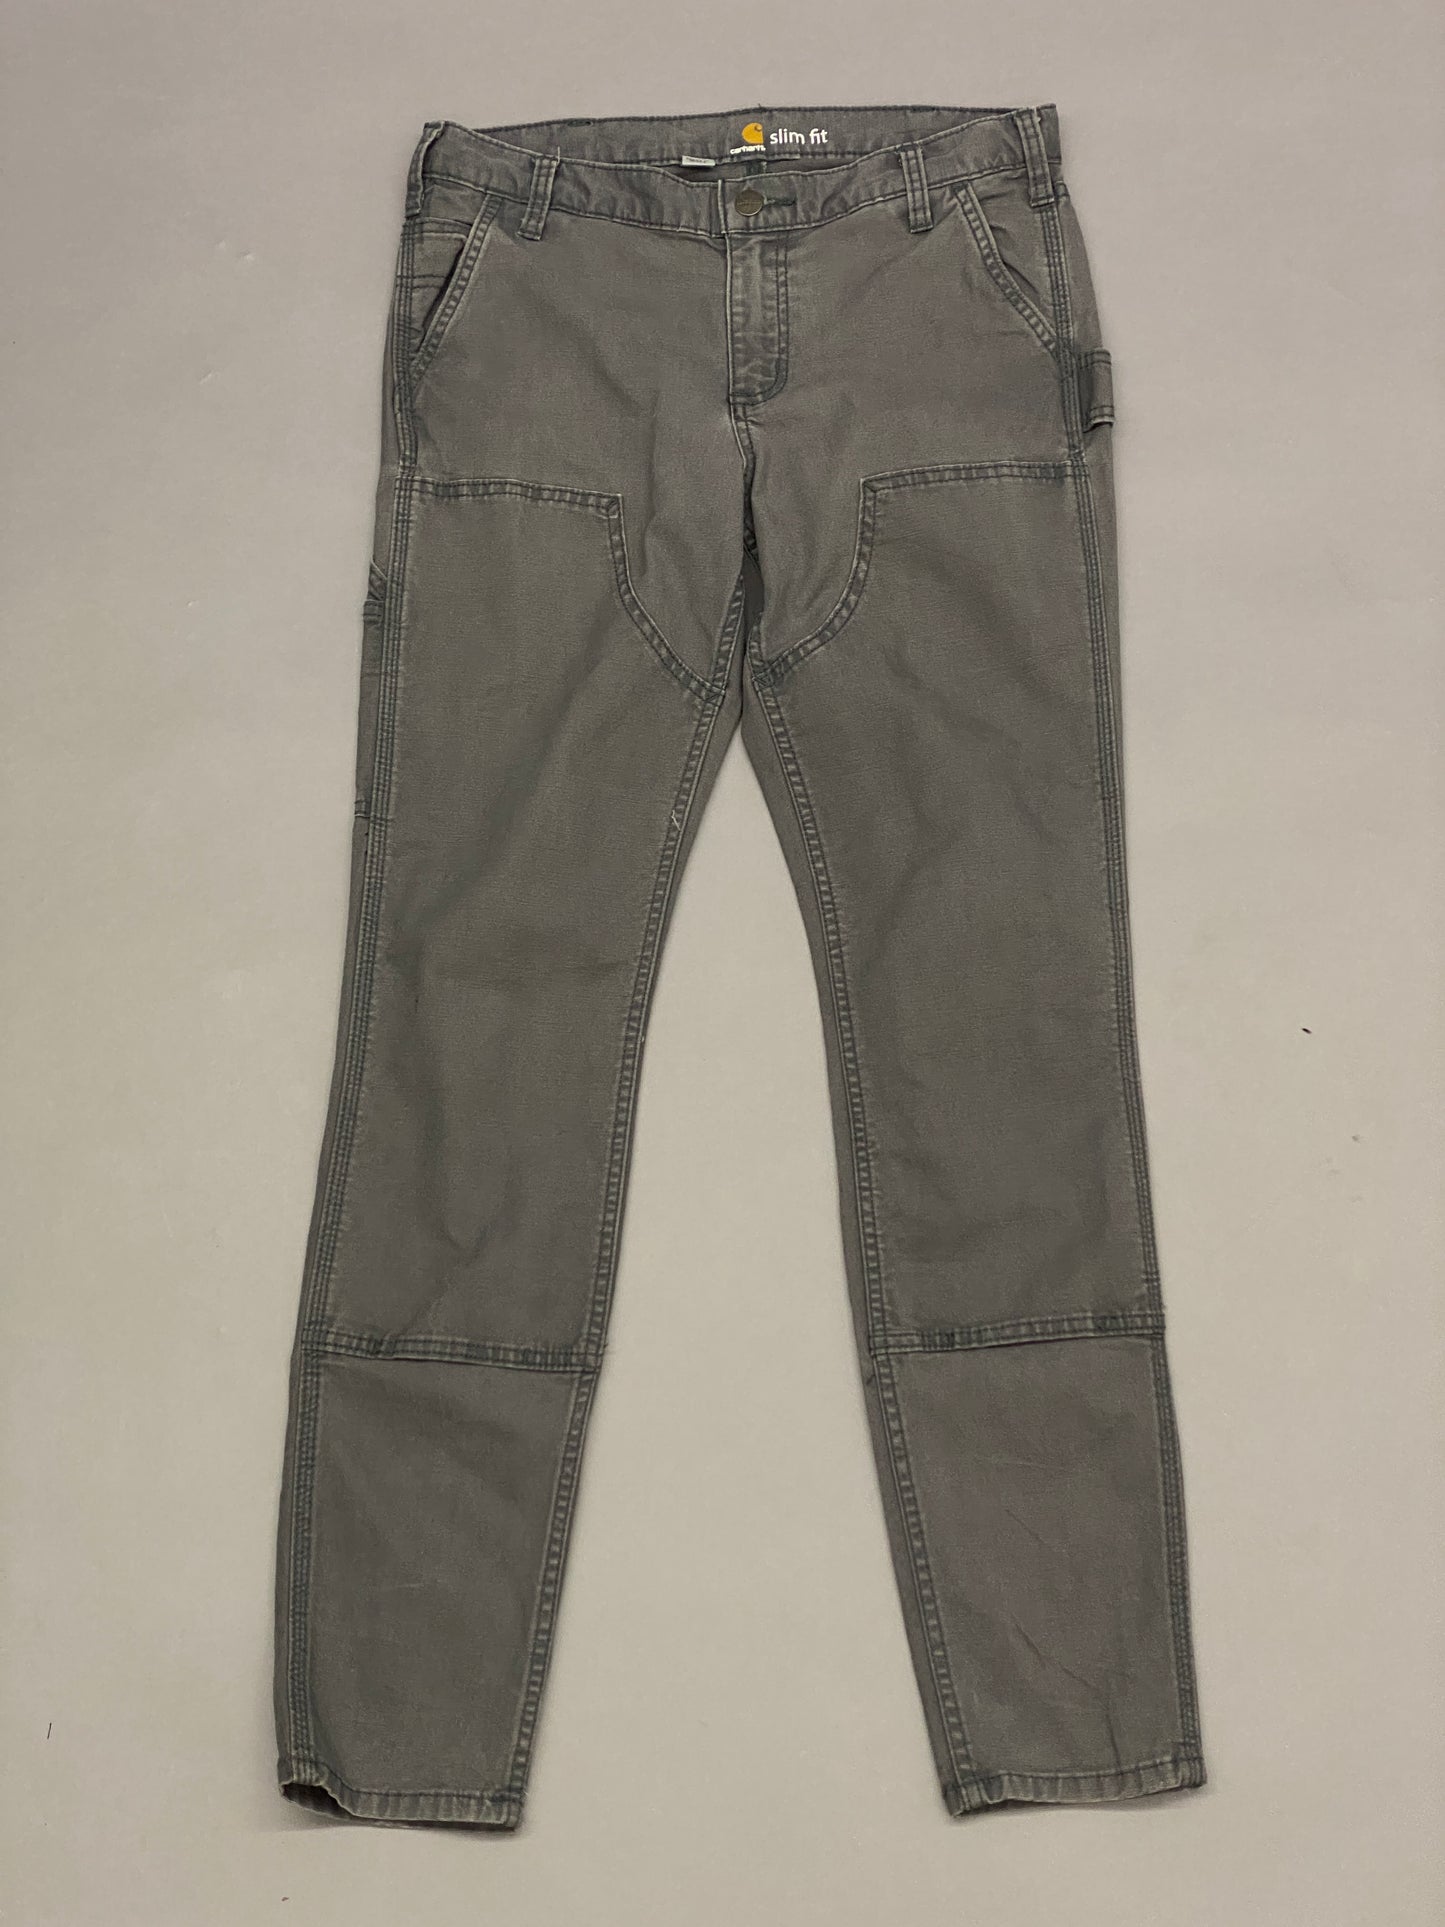 Double Knee Carhartt Jeans - W6 o 31